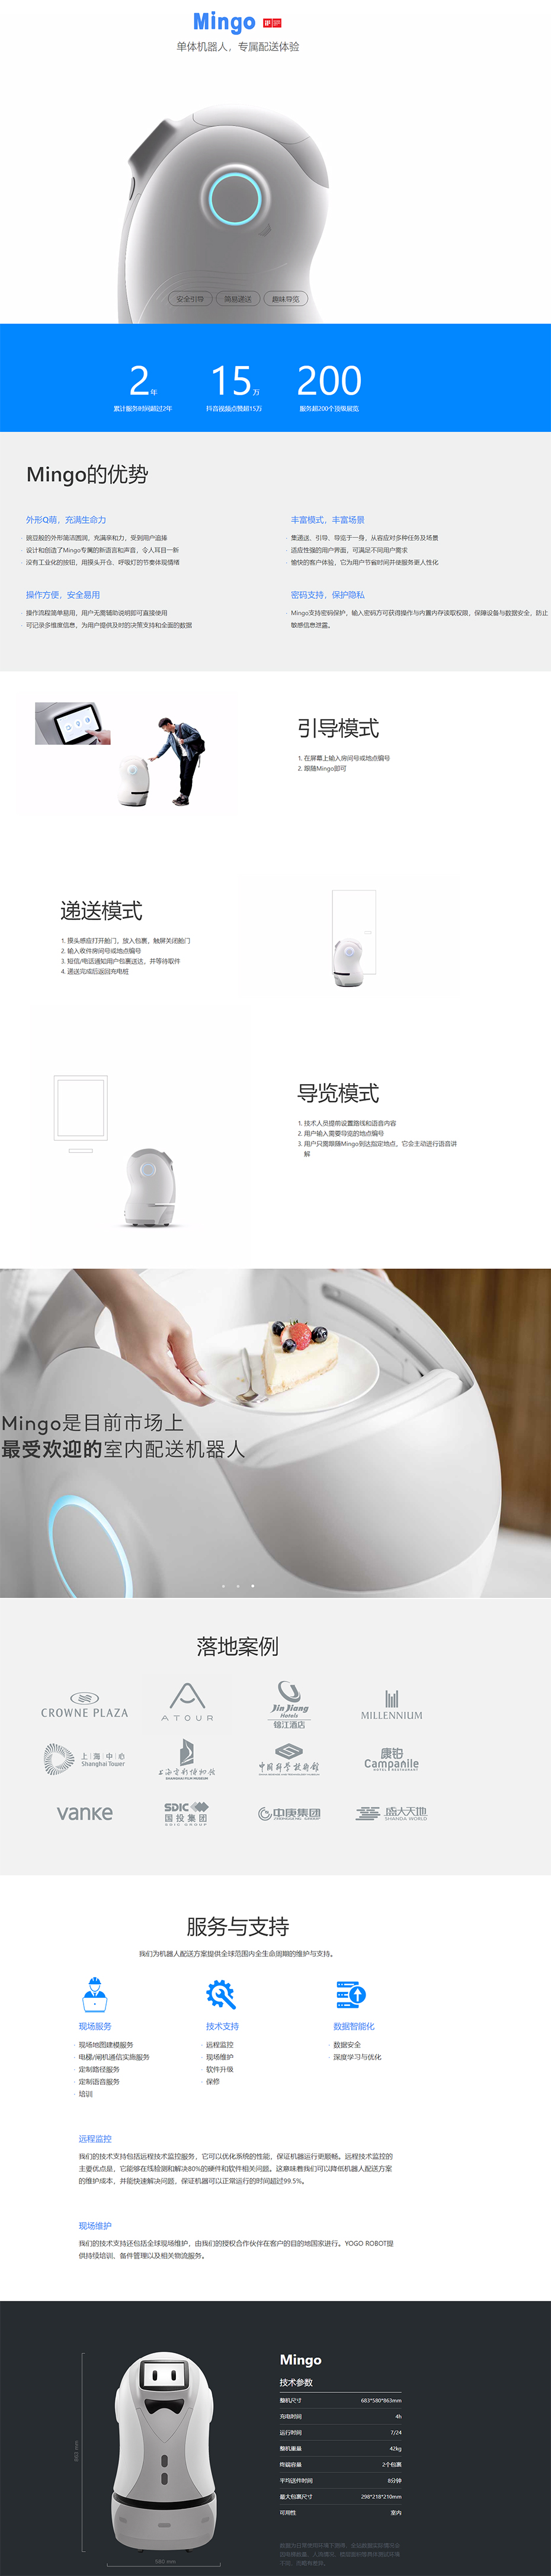 MINGO - YOGO ROBOT.jpg